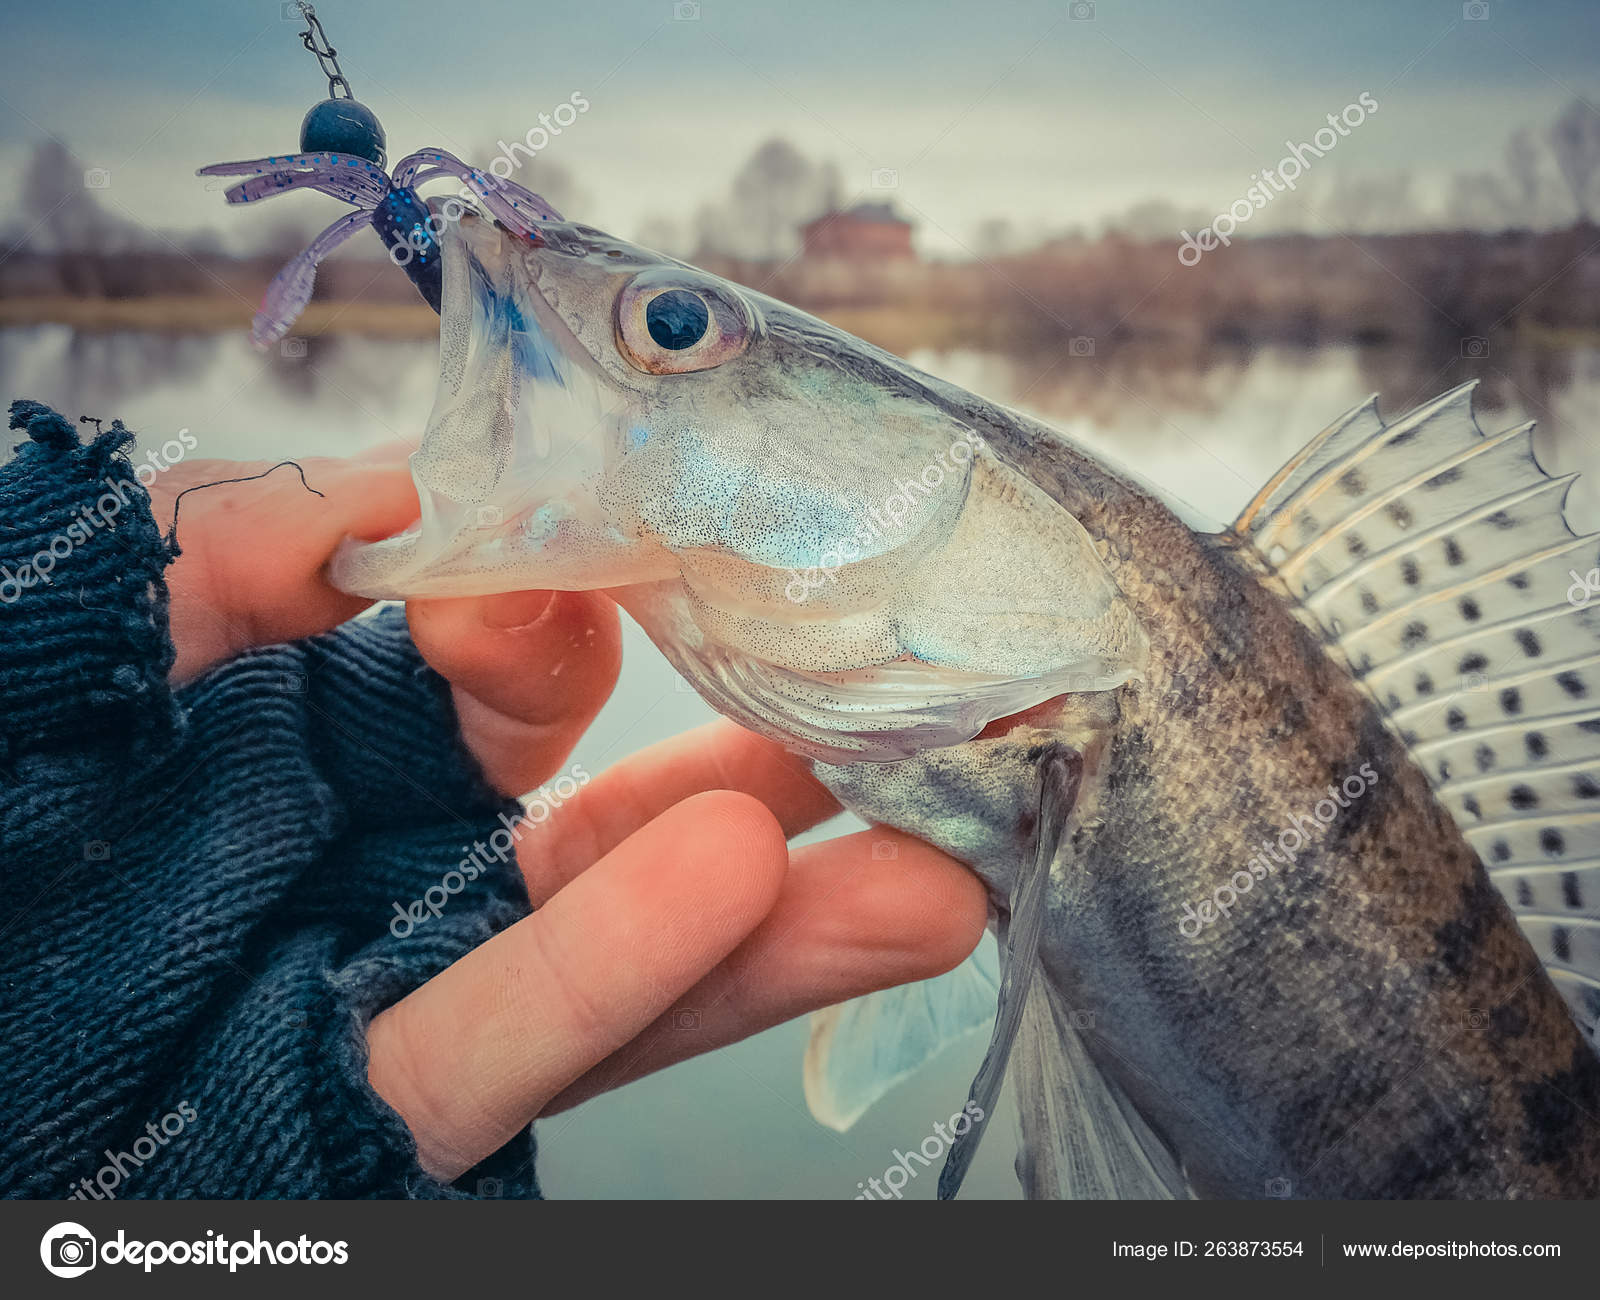 https://st4.depositphotos.com/2696723/26387/i/1600/depositphotos_263873554-stock-photo-background-on-a-fishing-theme.jpg